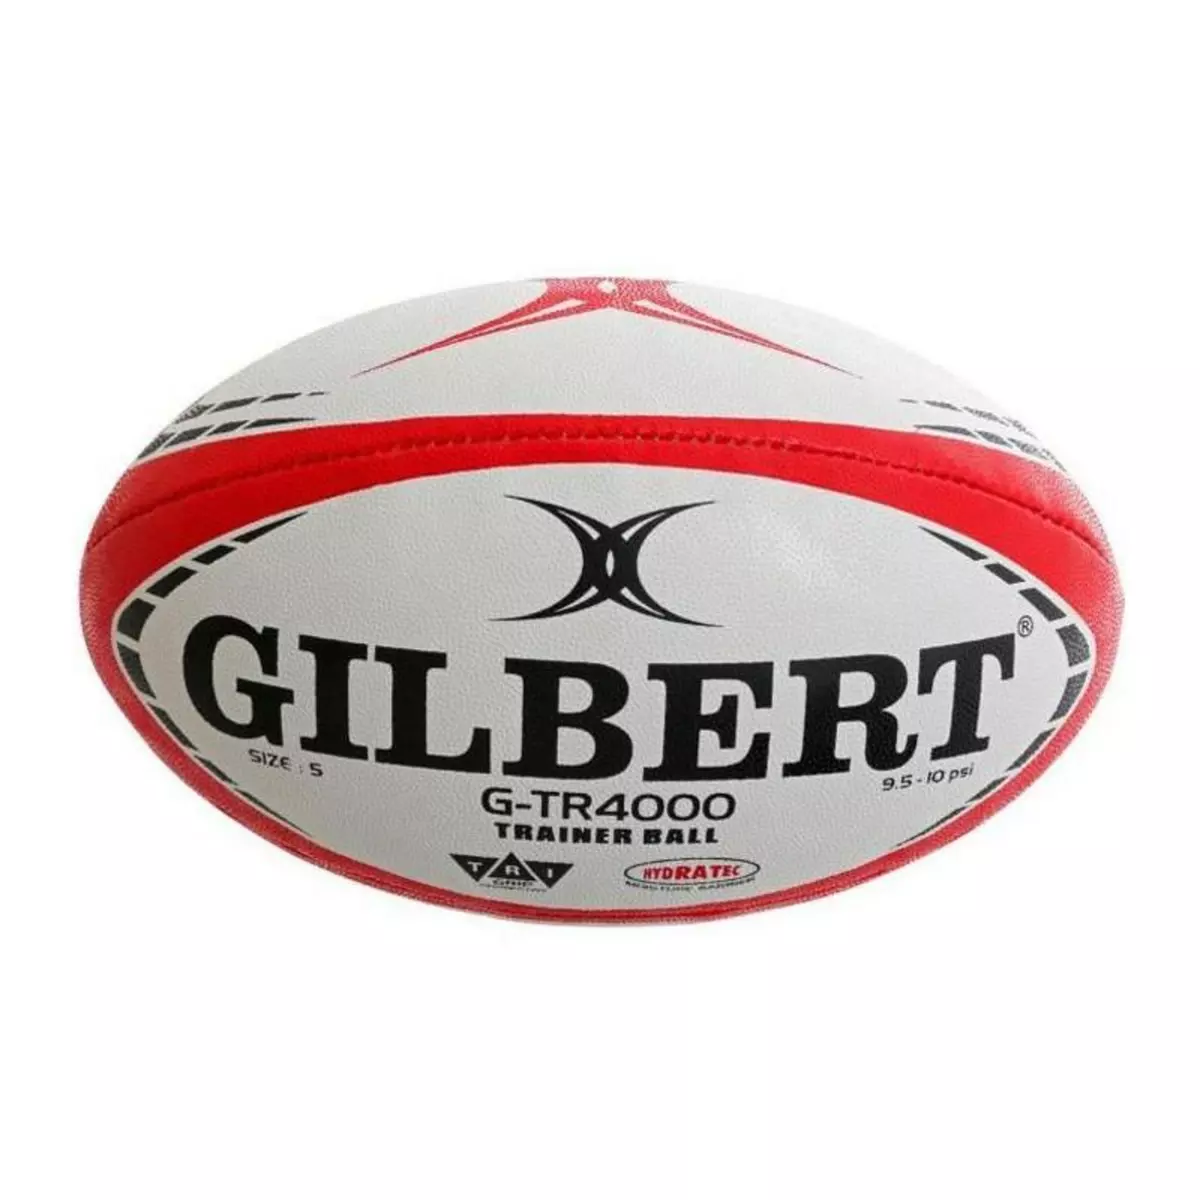 GILBERT GILBERT Ballon G-TR4000 TRAINER - Taille 3 - Rouge